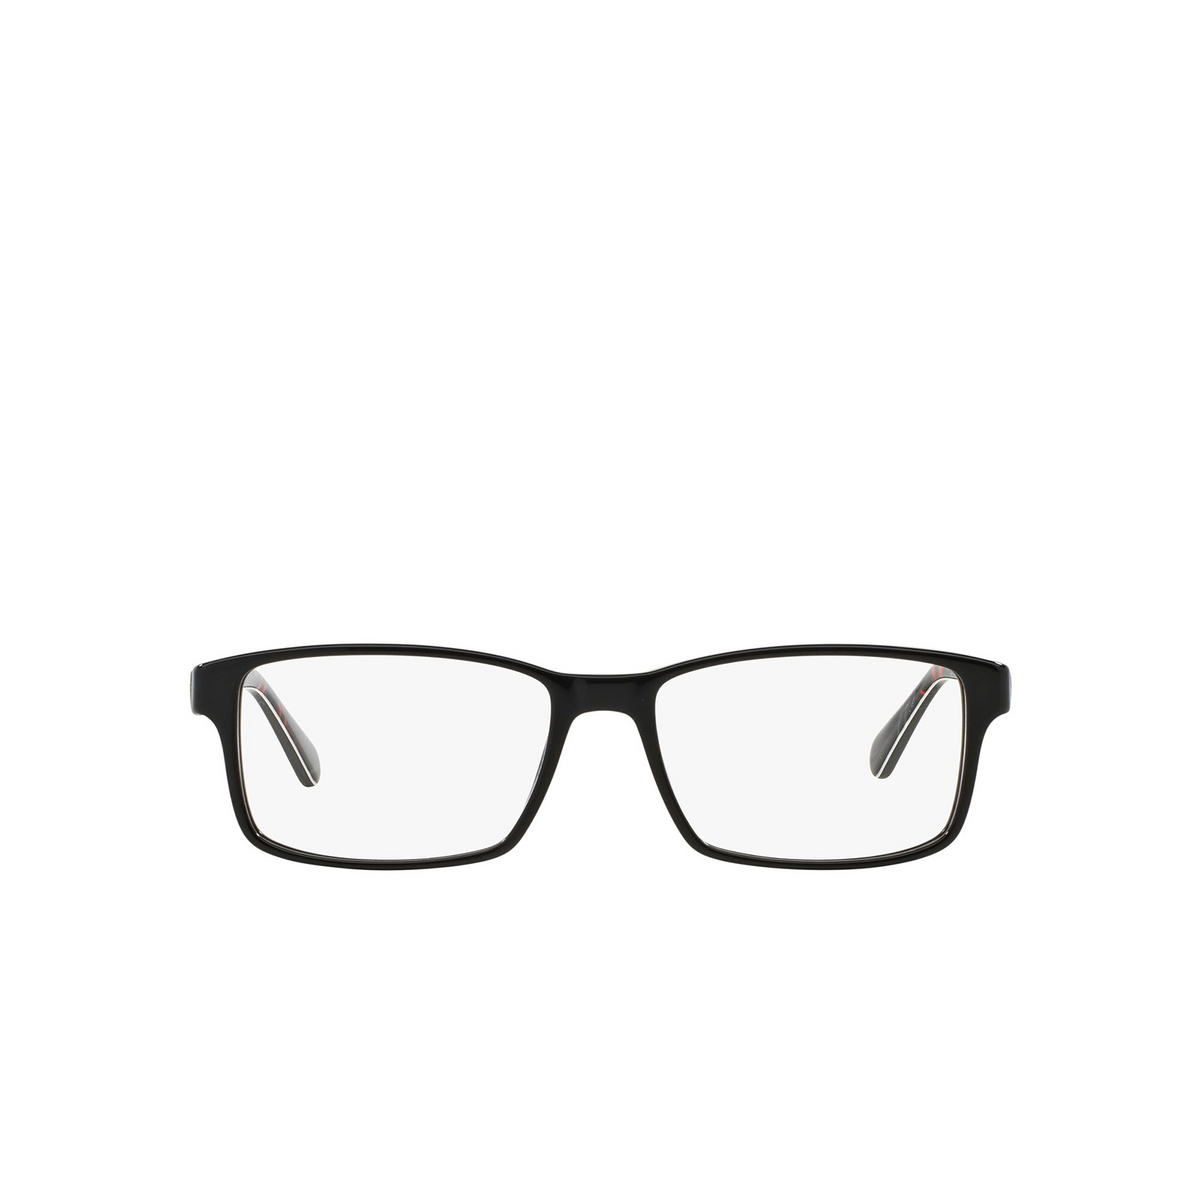 Polo Ralph Lauren® Rectangle Eyeglasses: PH2123 color Shiny Black 5489 - front view.